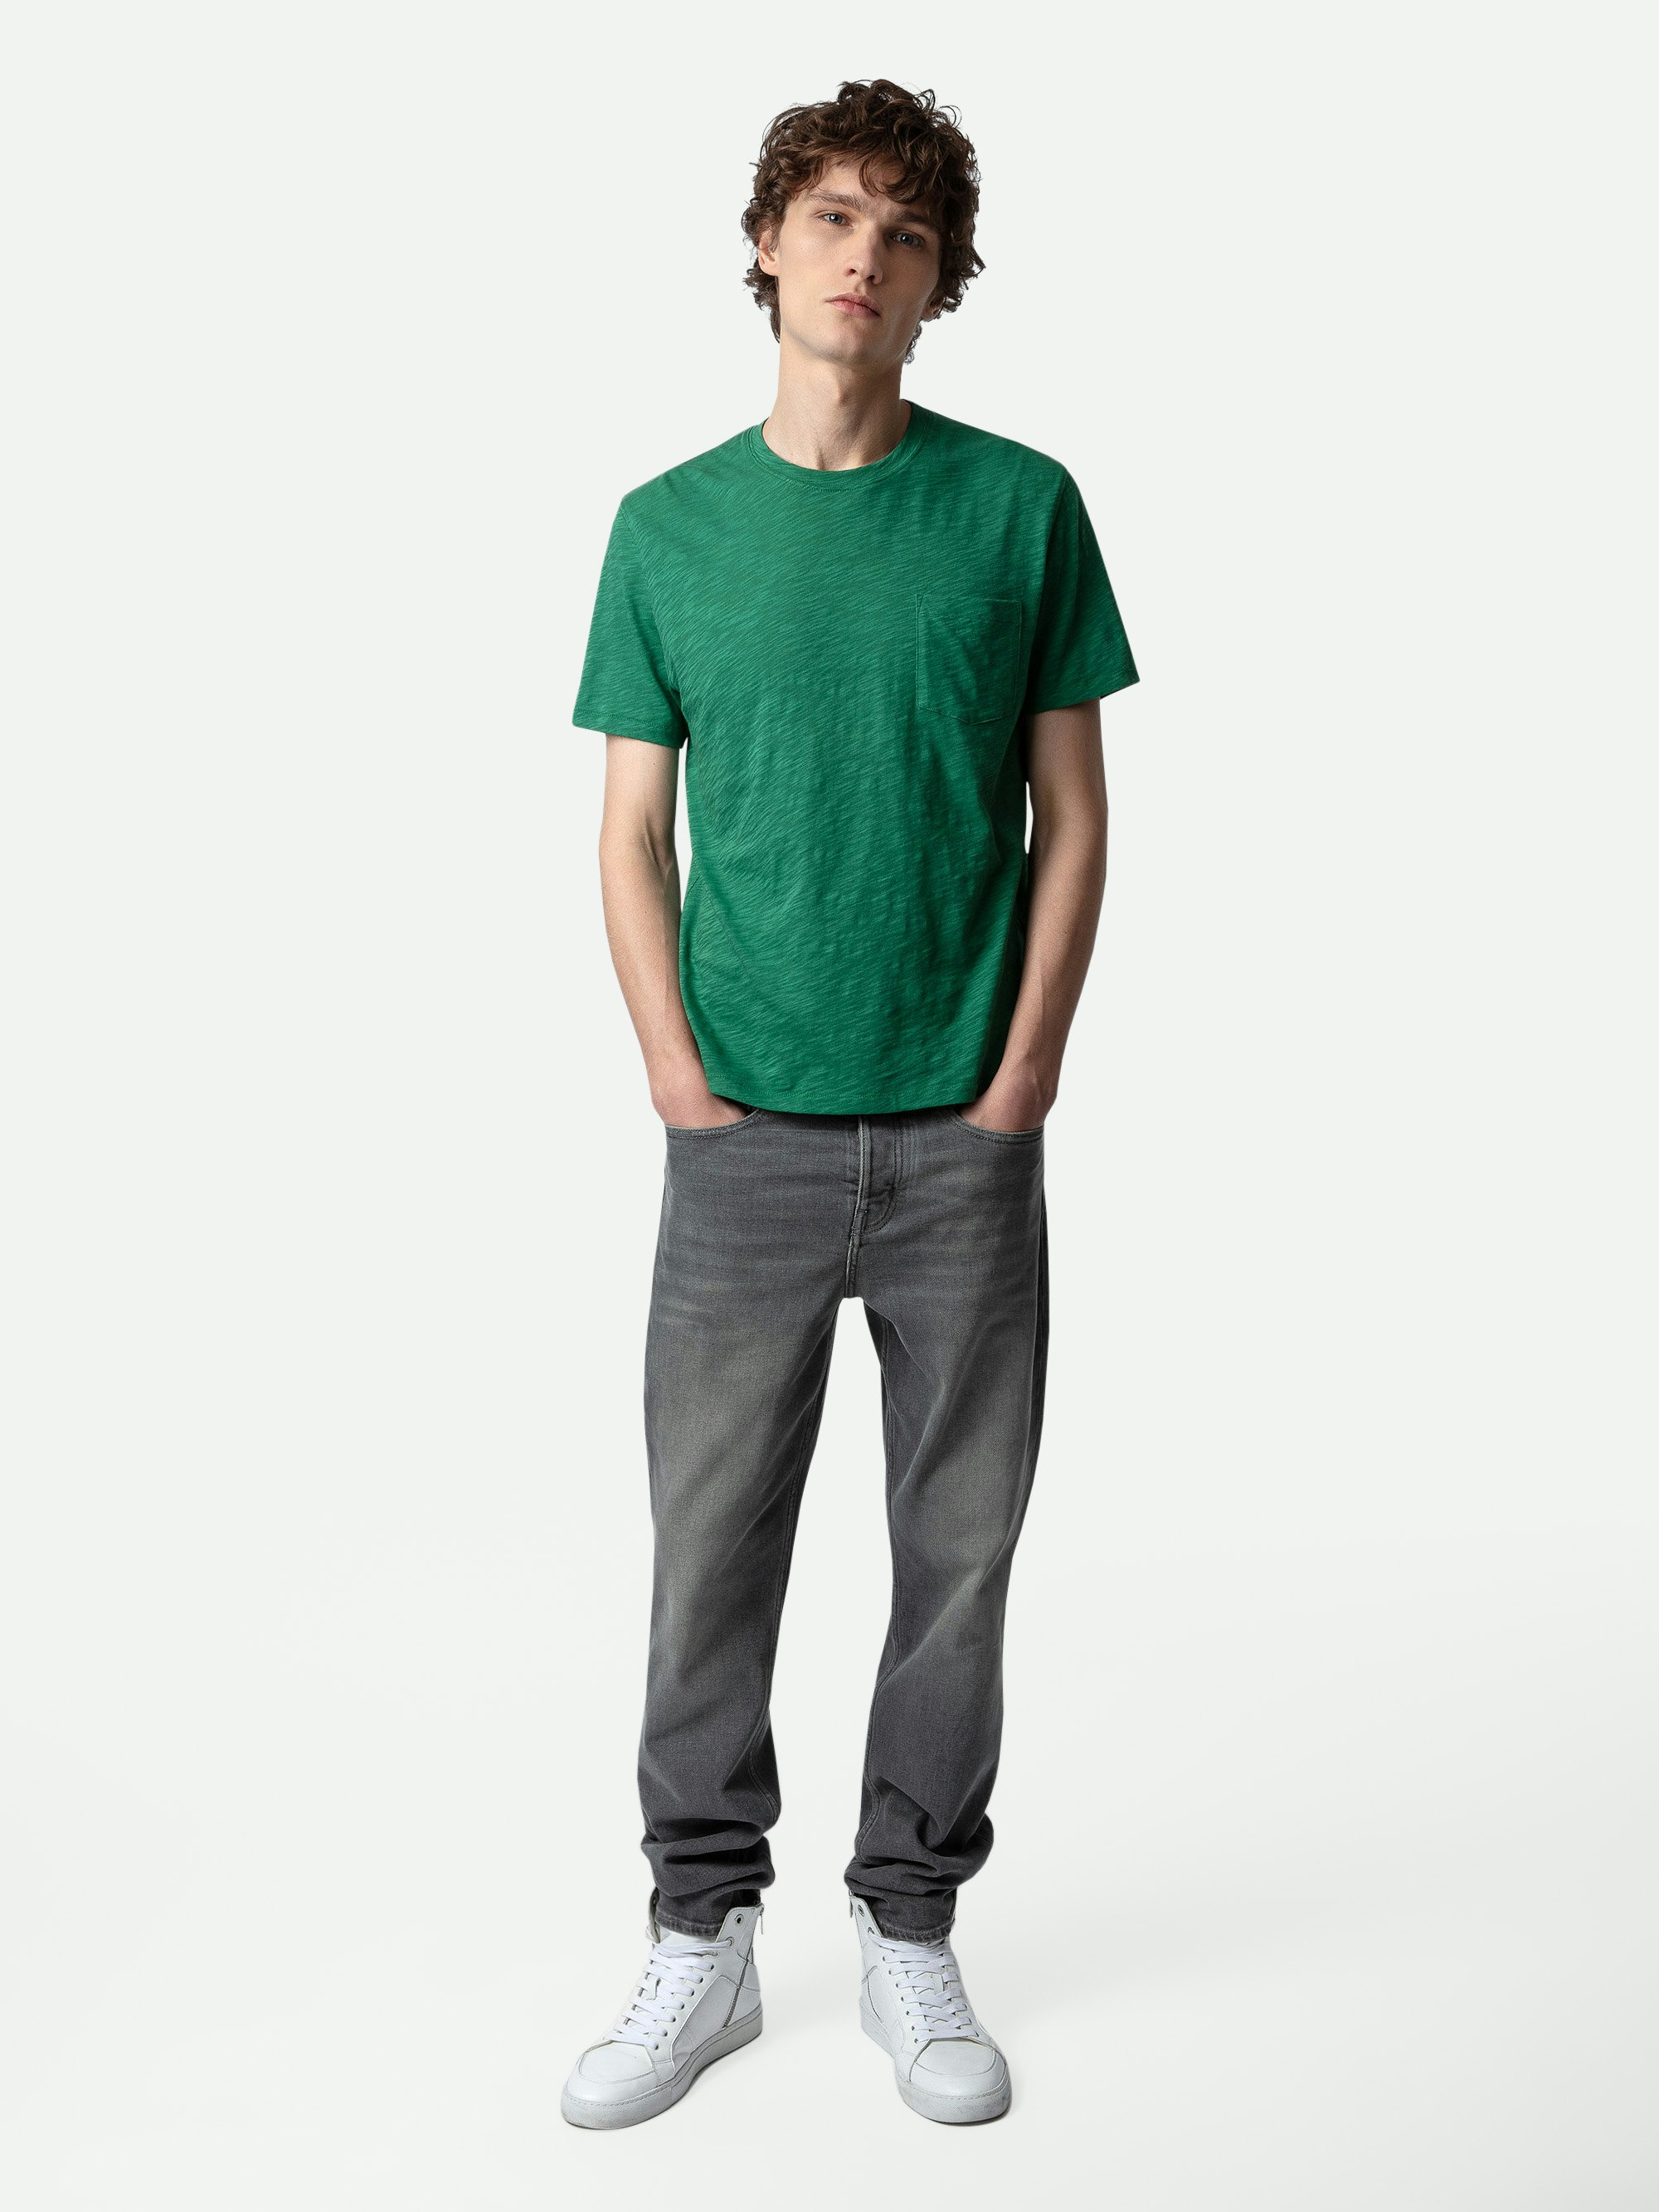 Camiseta Stockholm Flamme - Camiseta verde de algodón jaspeado de manga corta, con bolsillo y diseño Skull Block en la espalda.